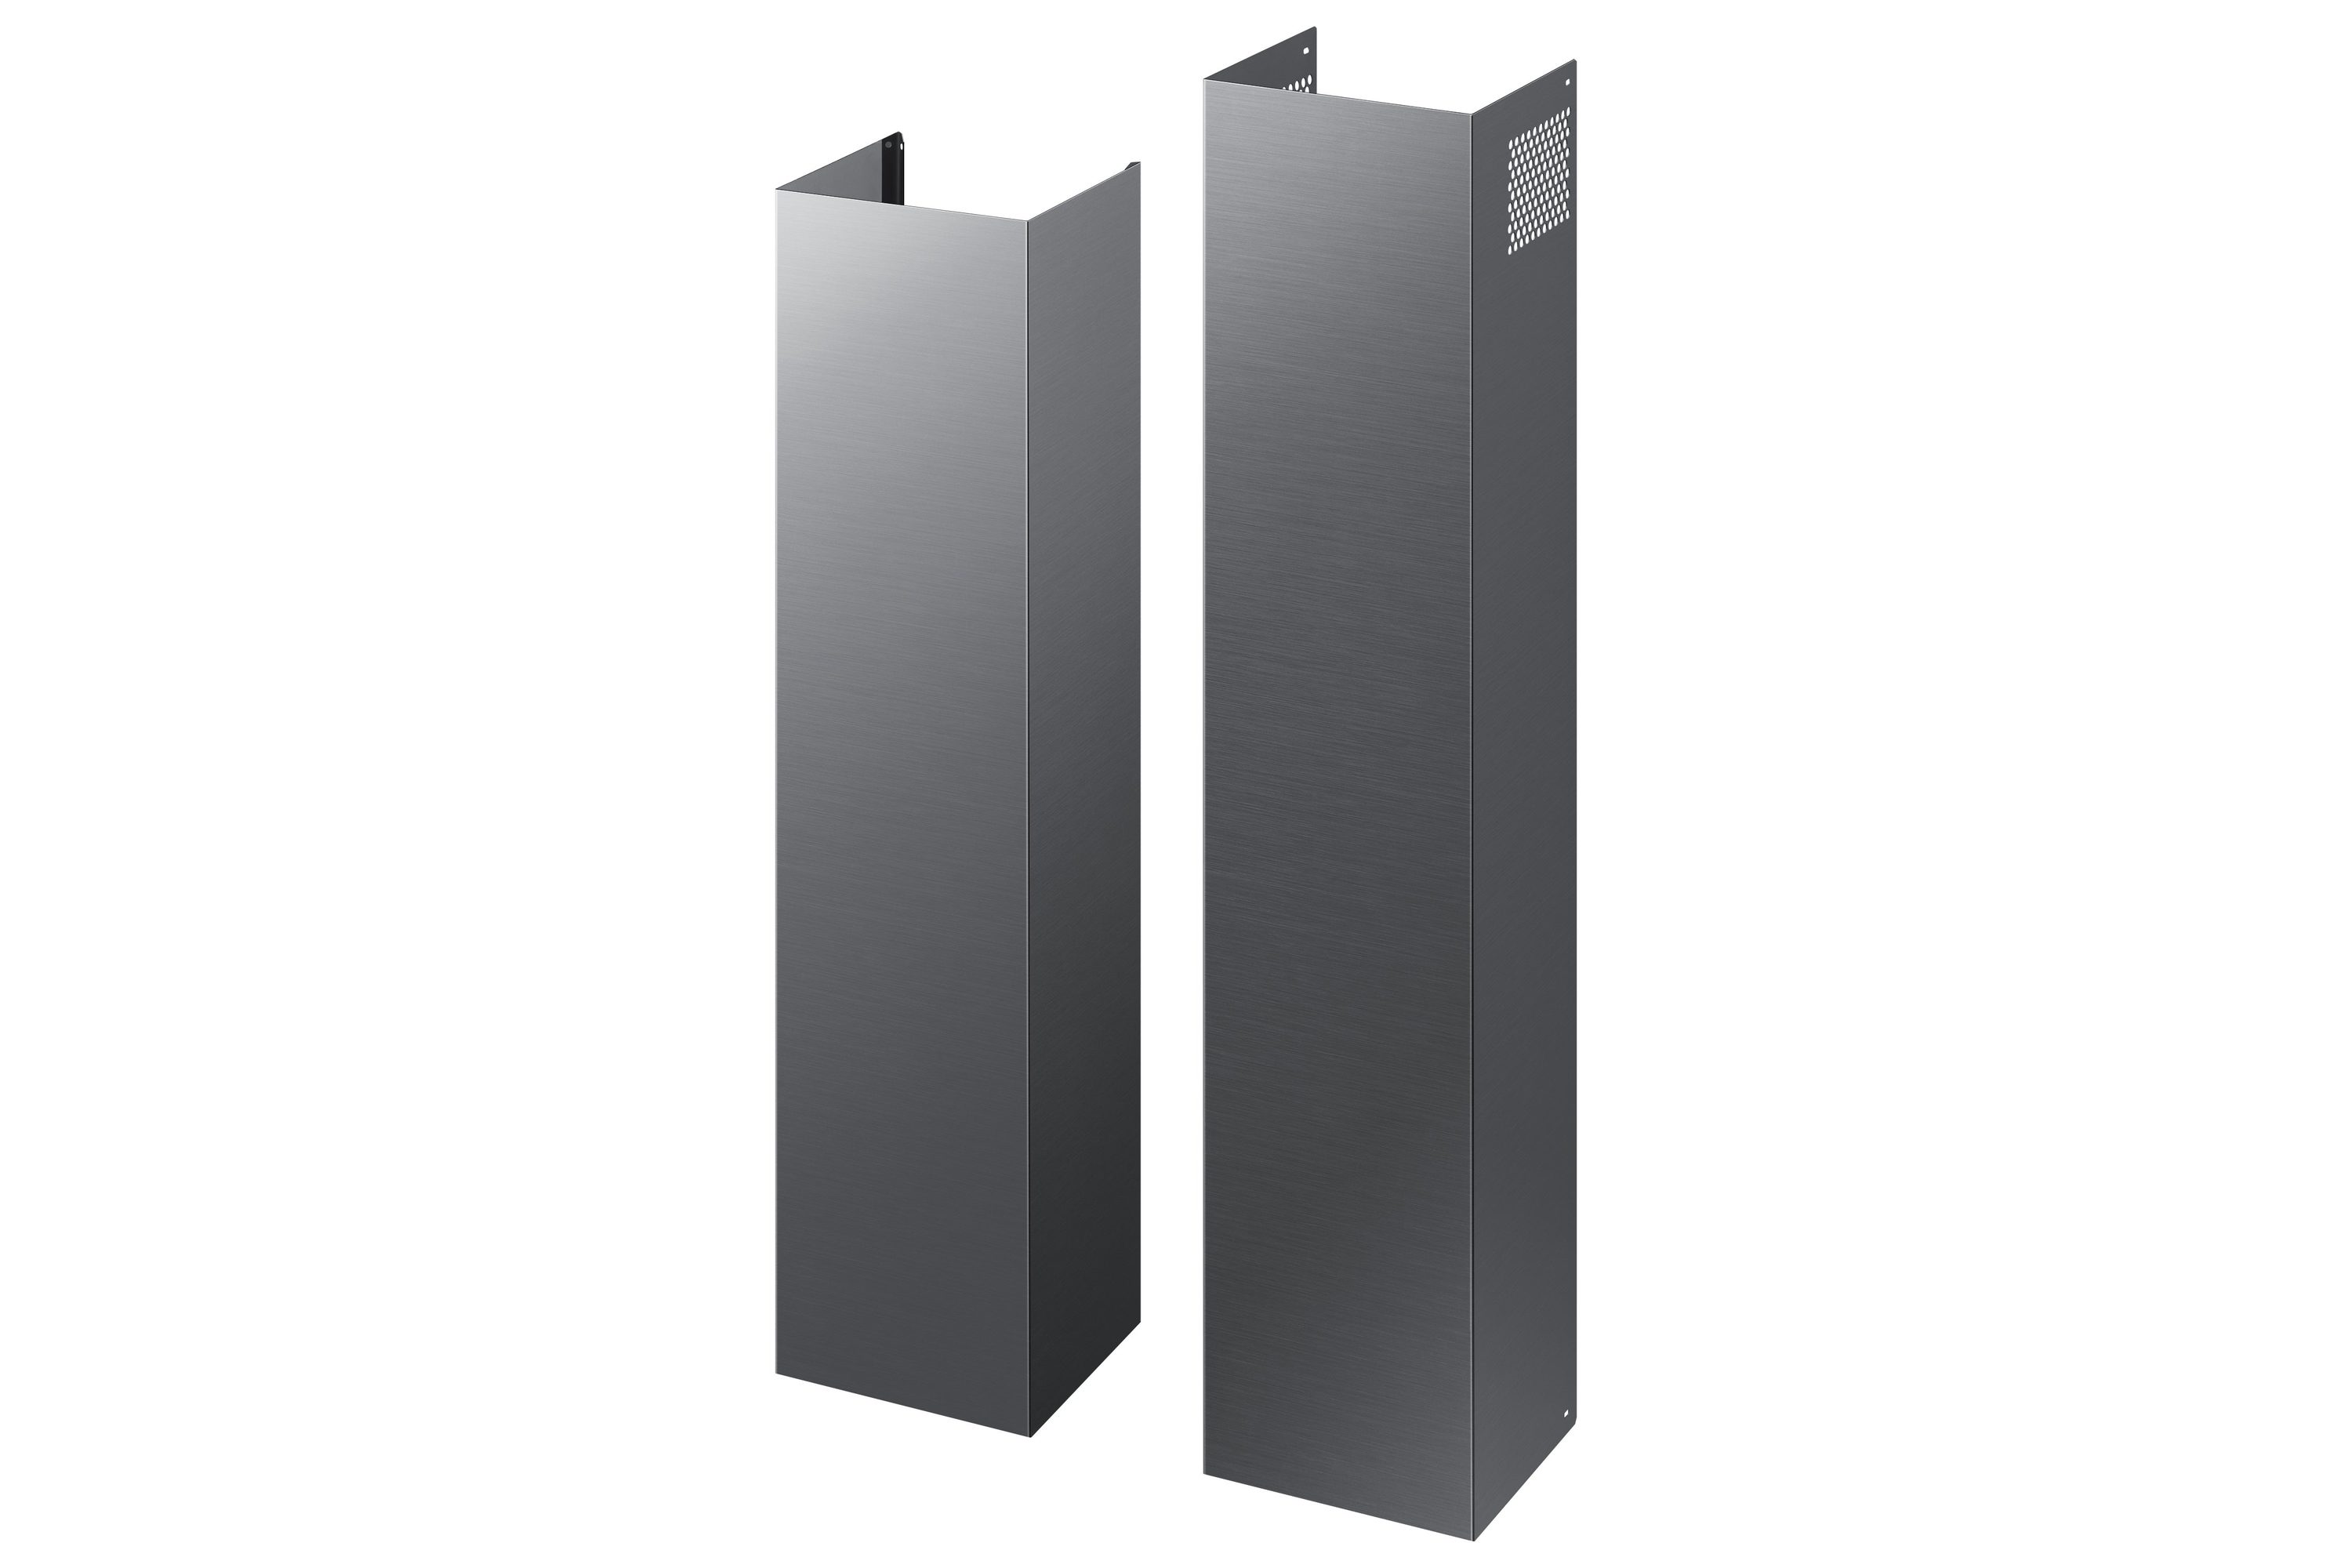 Samsung 36 Black Stainless Steel Wall Mounted Range Hood